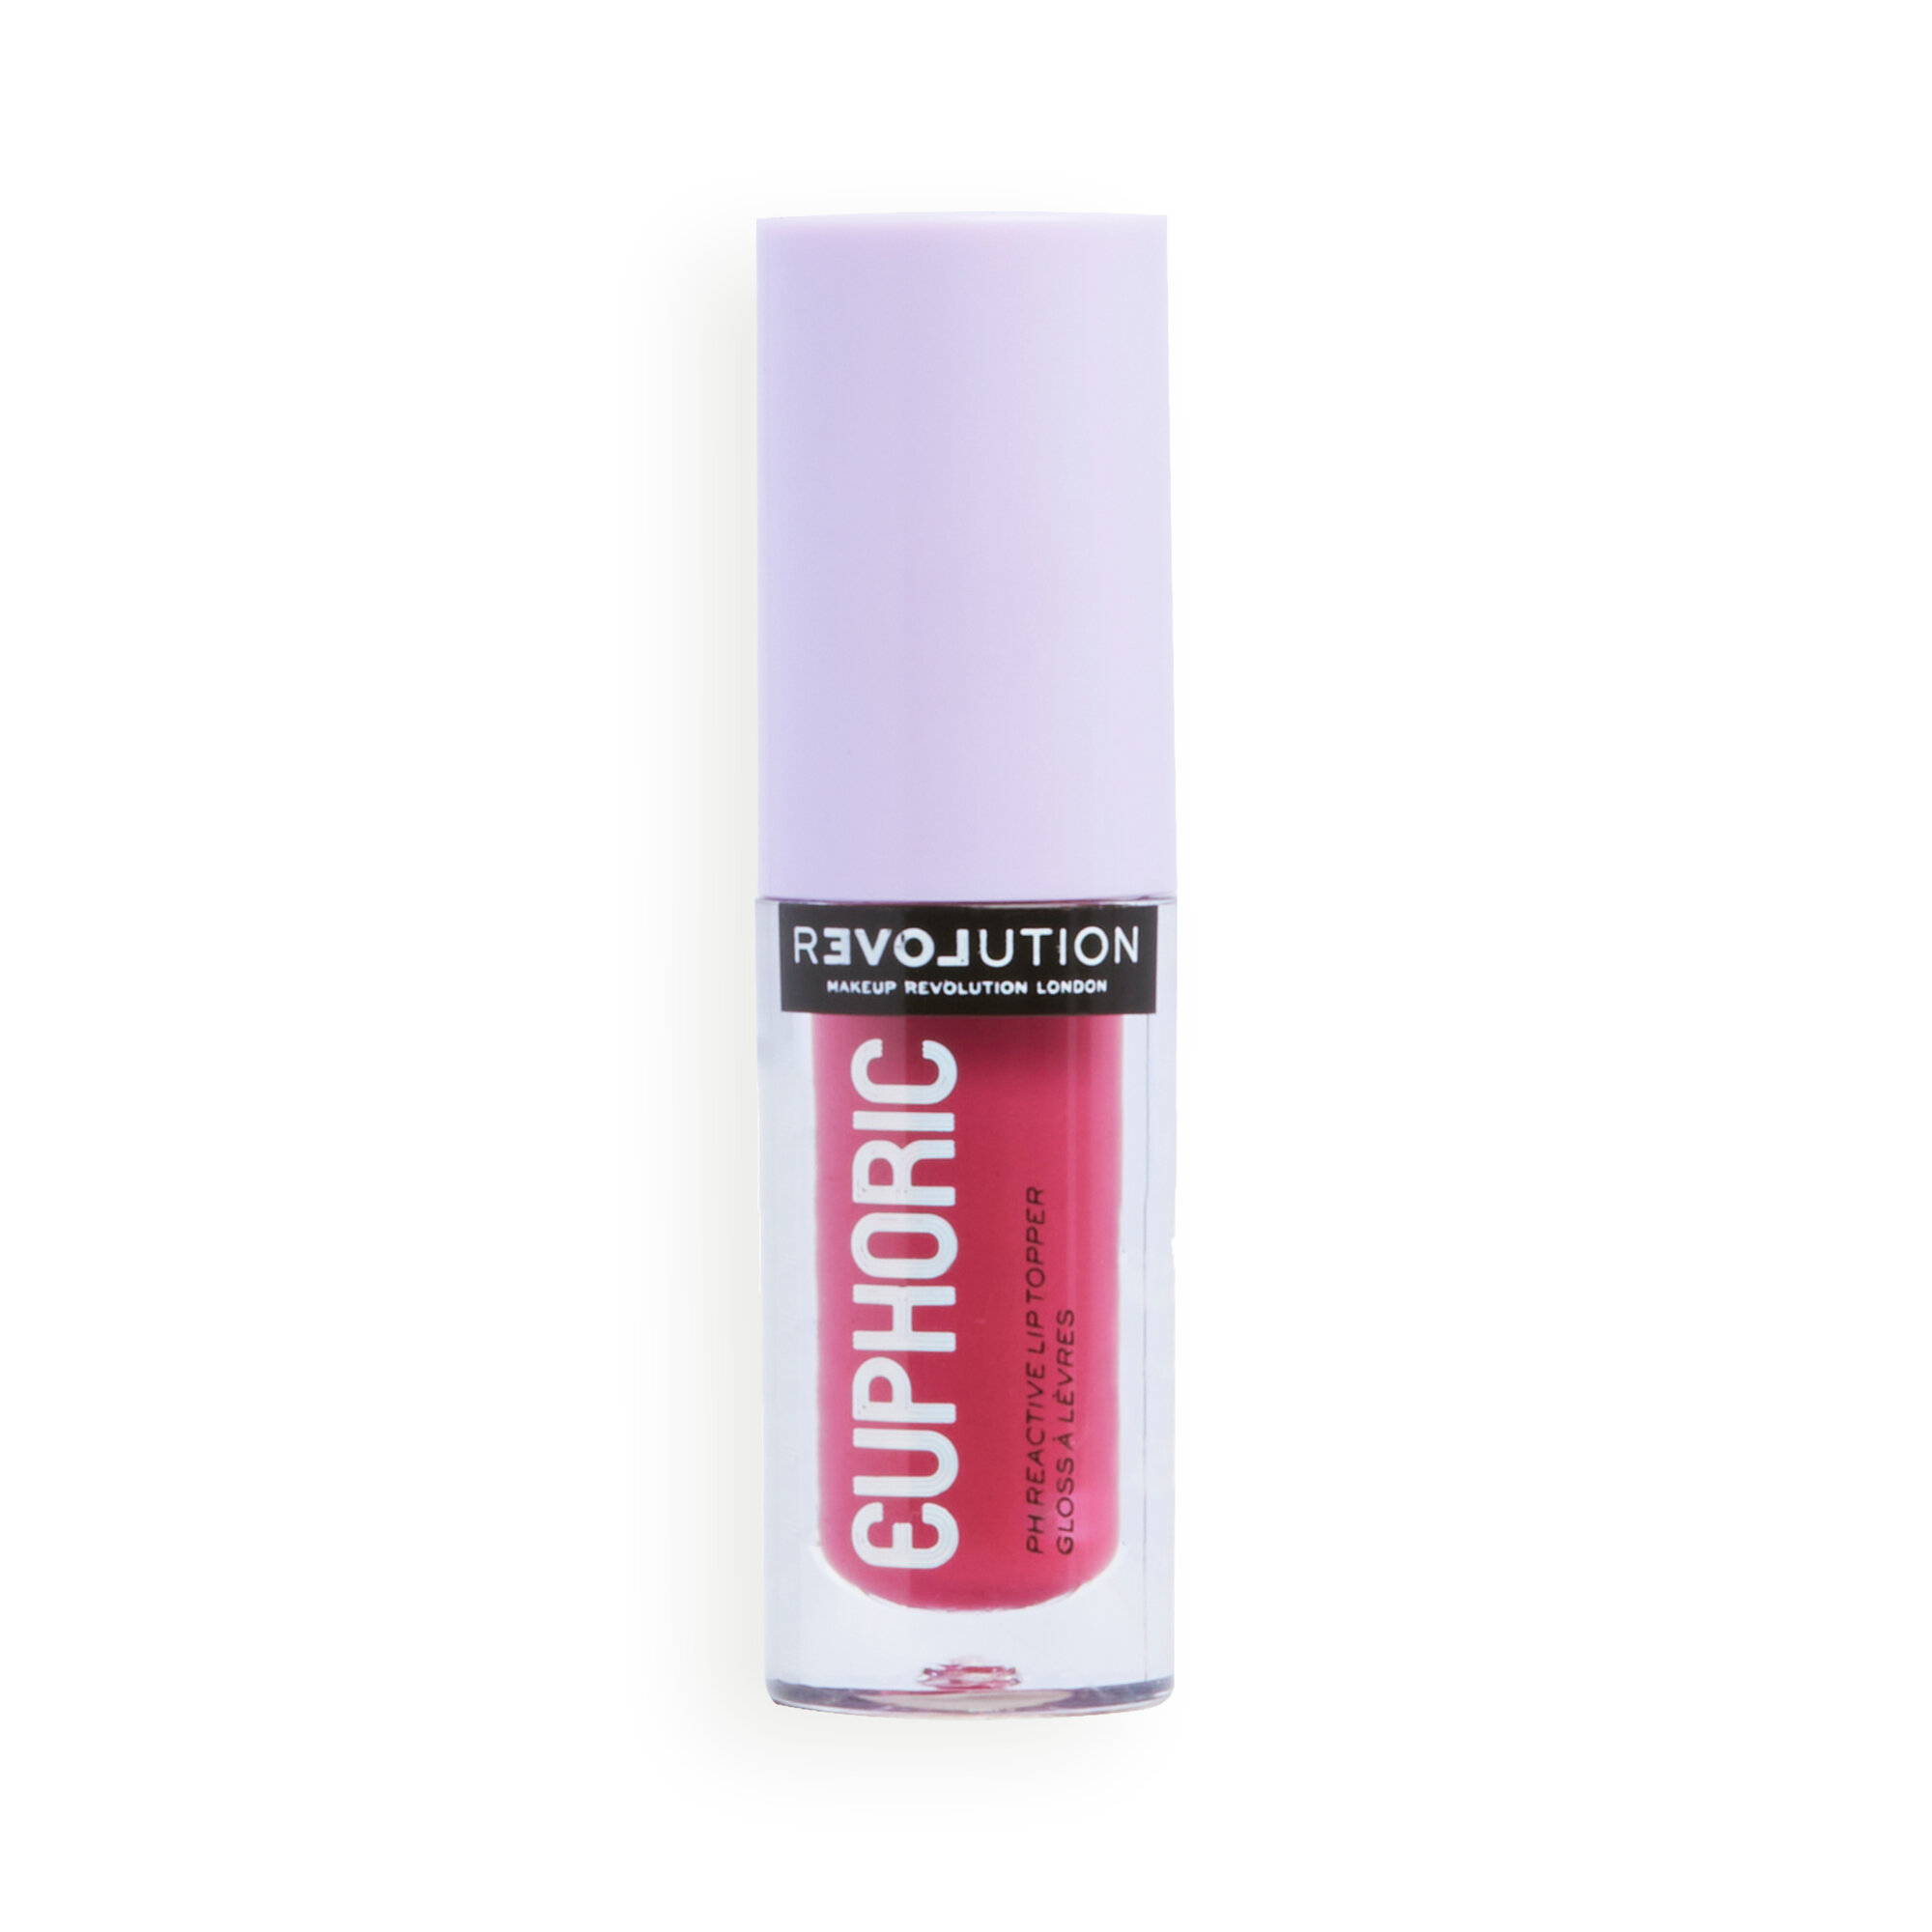 Relove by Revolution Euphoric Lip Switch Gloss